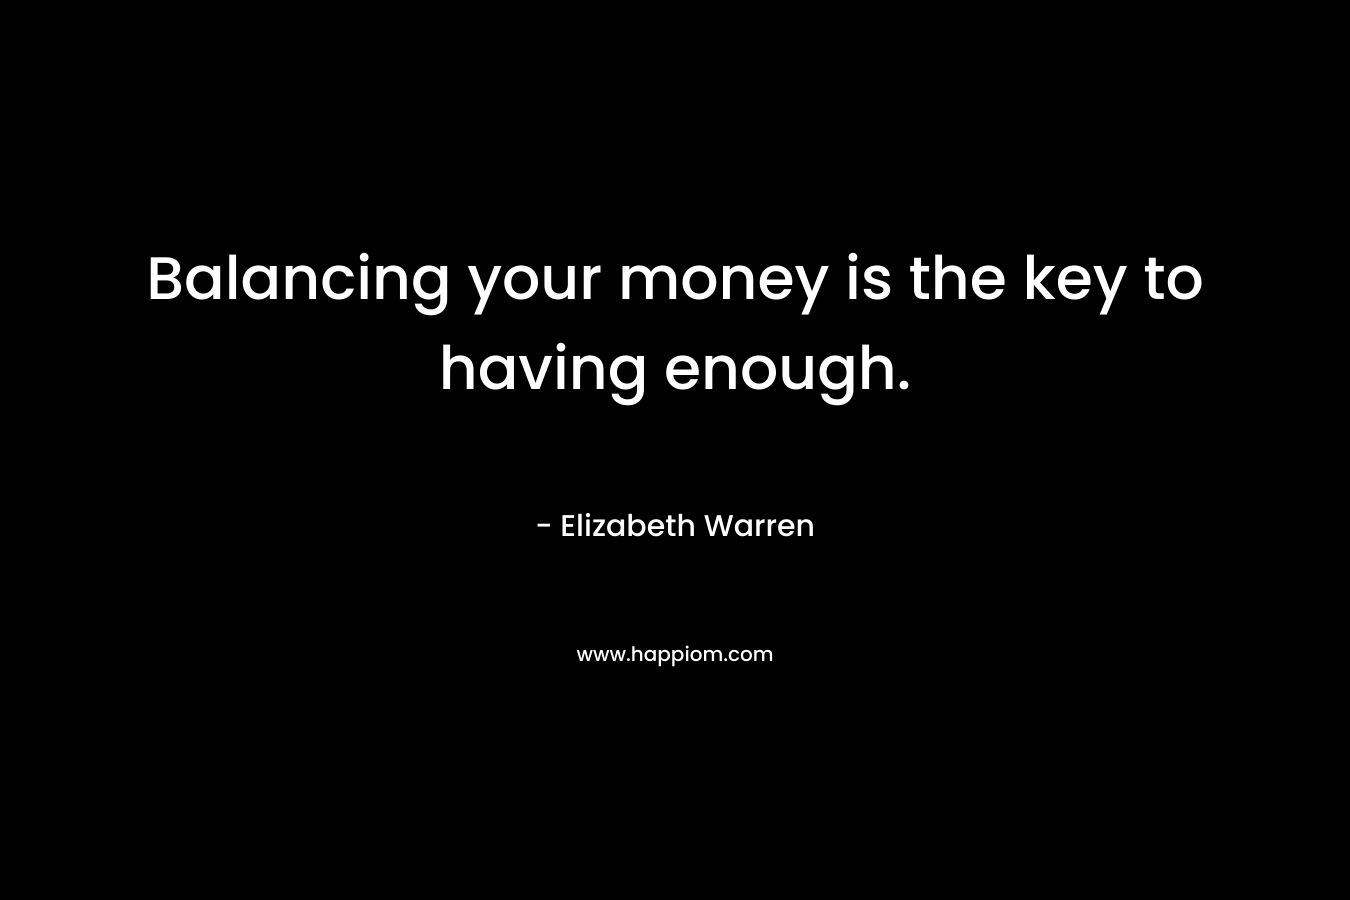 Balancing your money is the key to having enough. – Elizabeth Warren